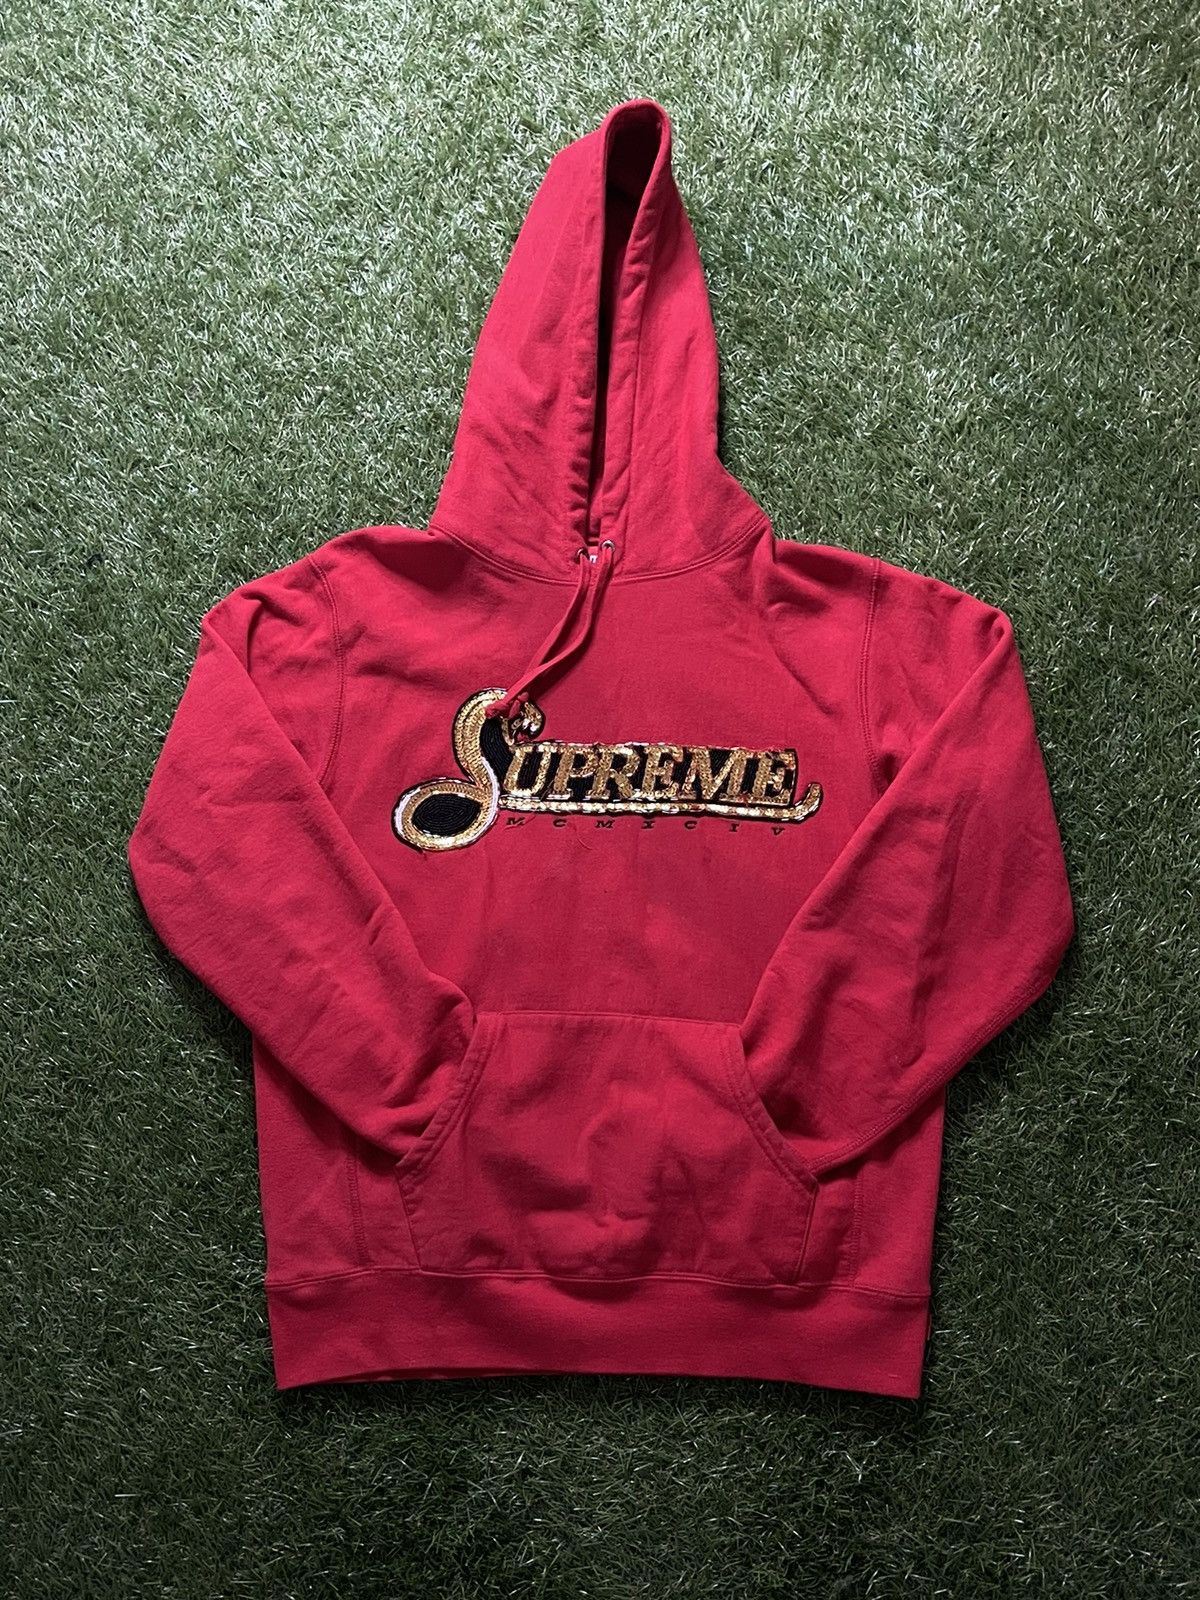 Supreme Supreme FW19 Sequin Viper Hooded Sweatshirt | Grailed